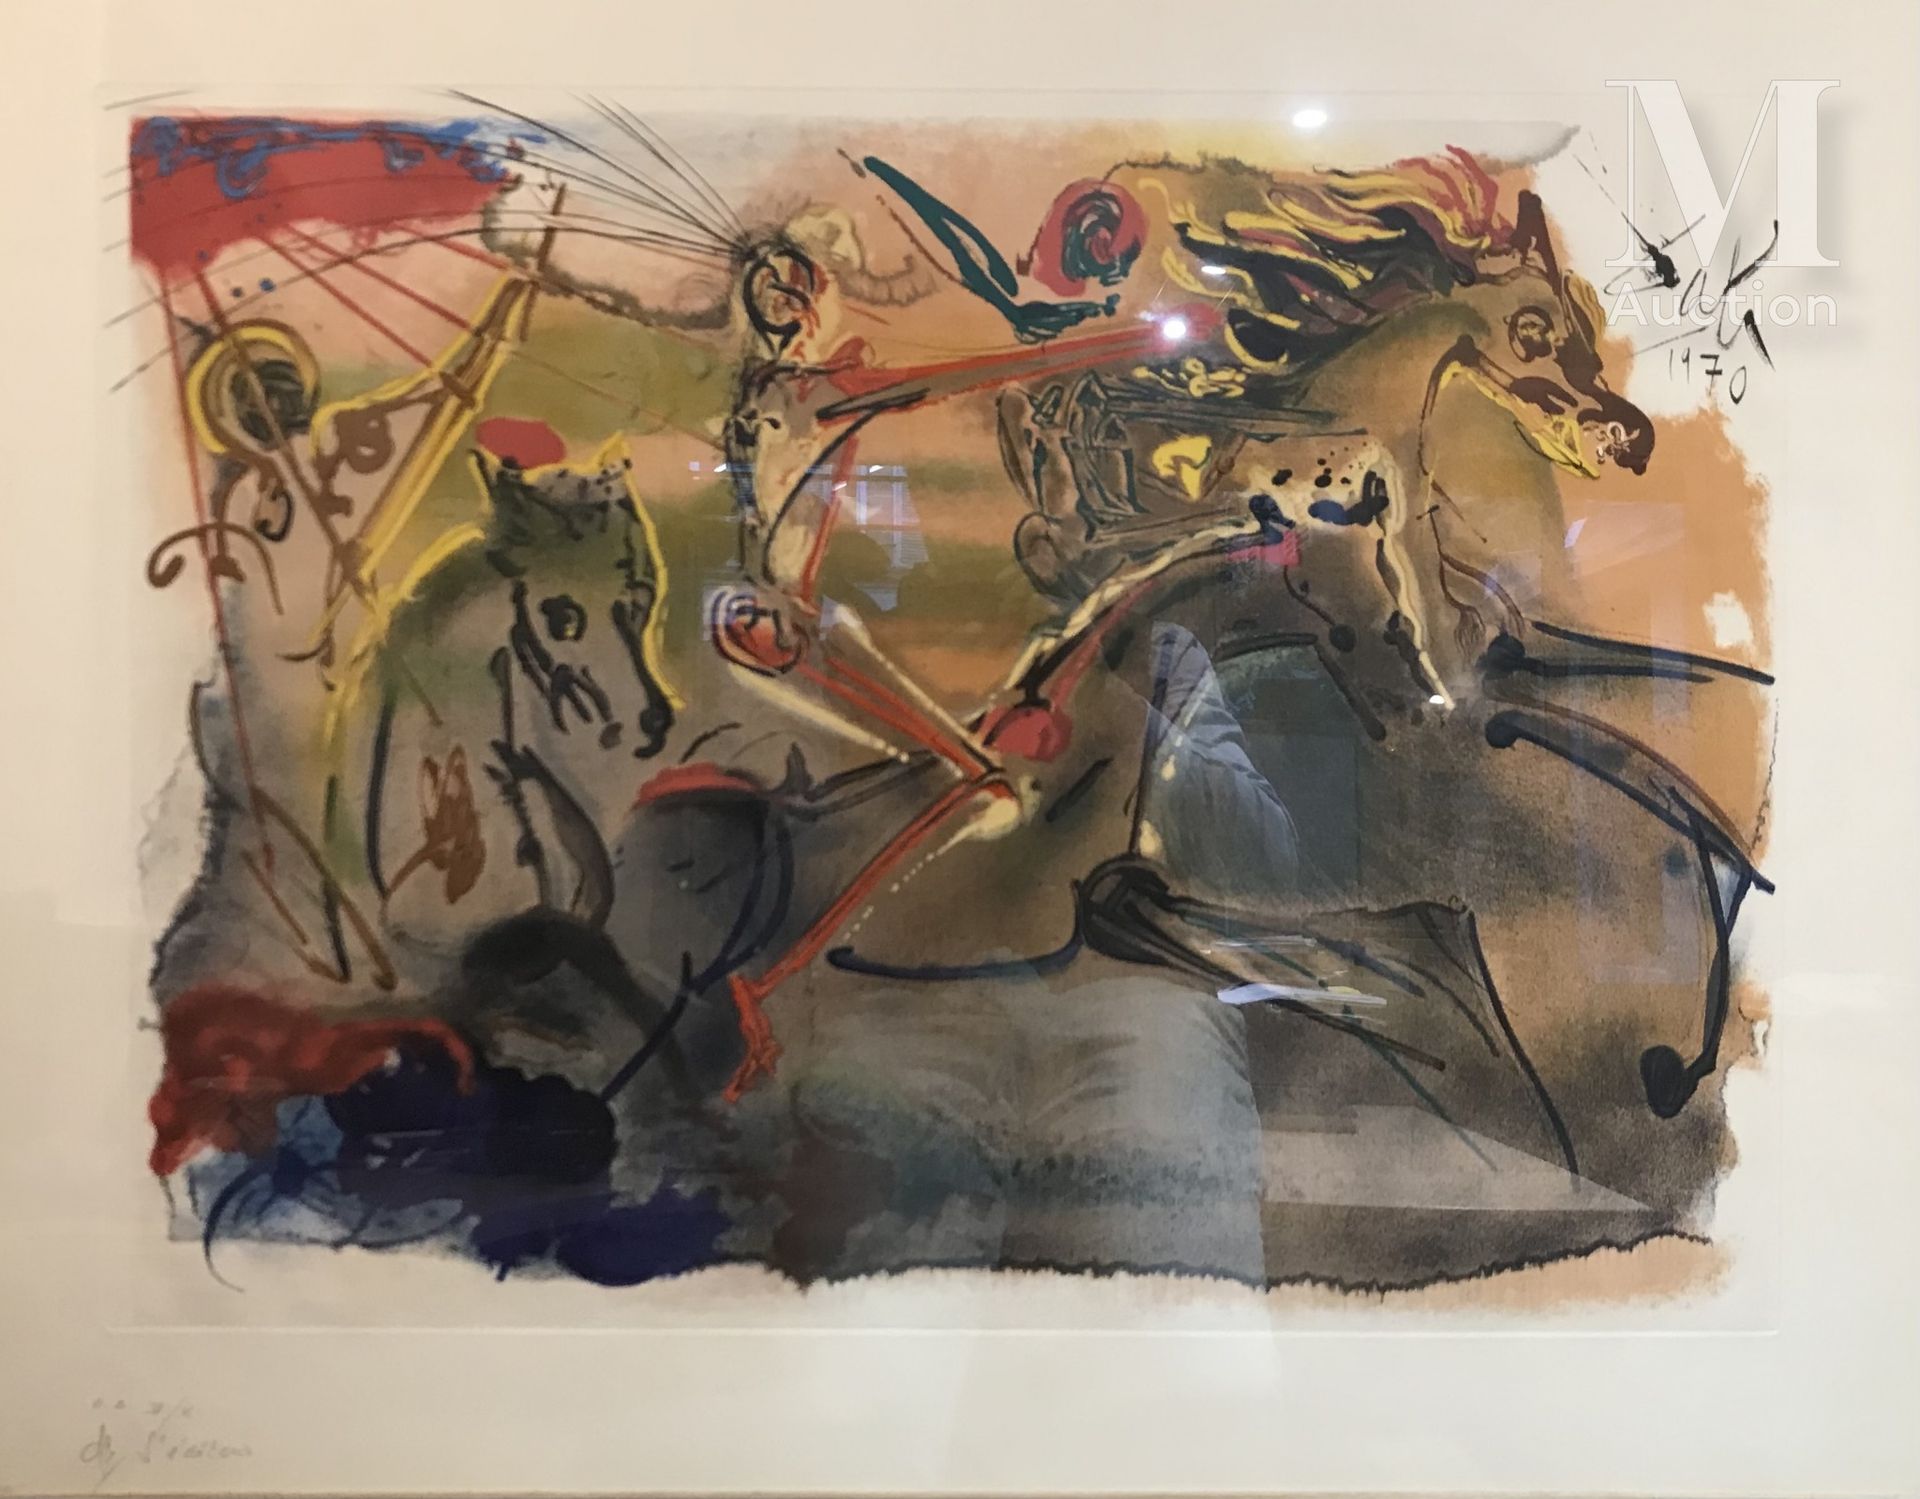 Salvador DALI (1904-1989) 火焰骑士

混合媒体：蚀刻、平版印刷和压印

艺术家的证明，V/X左下角

85 x 105厘米